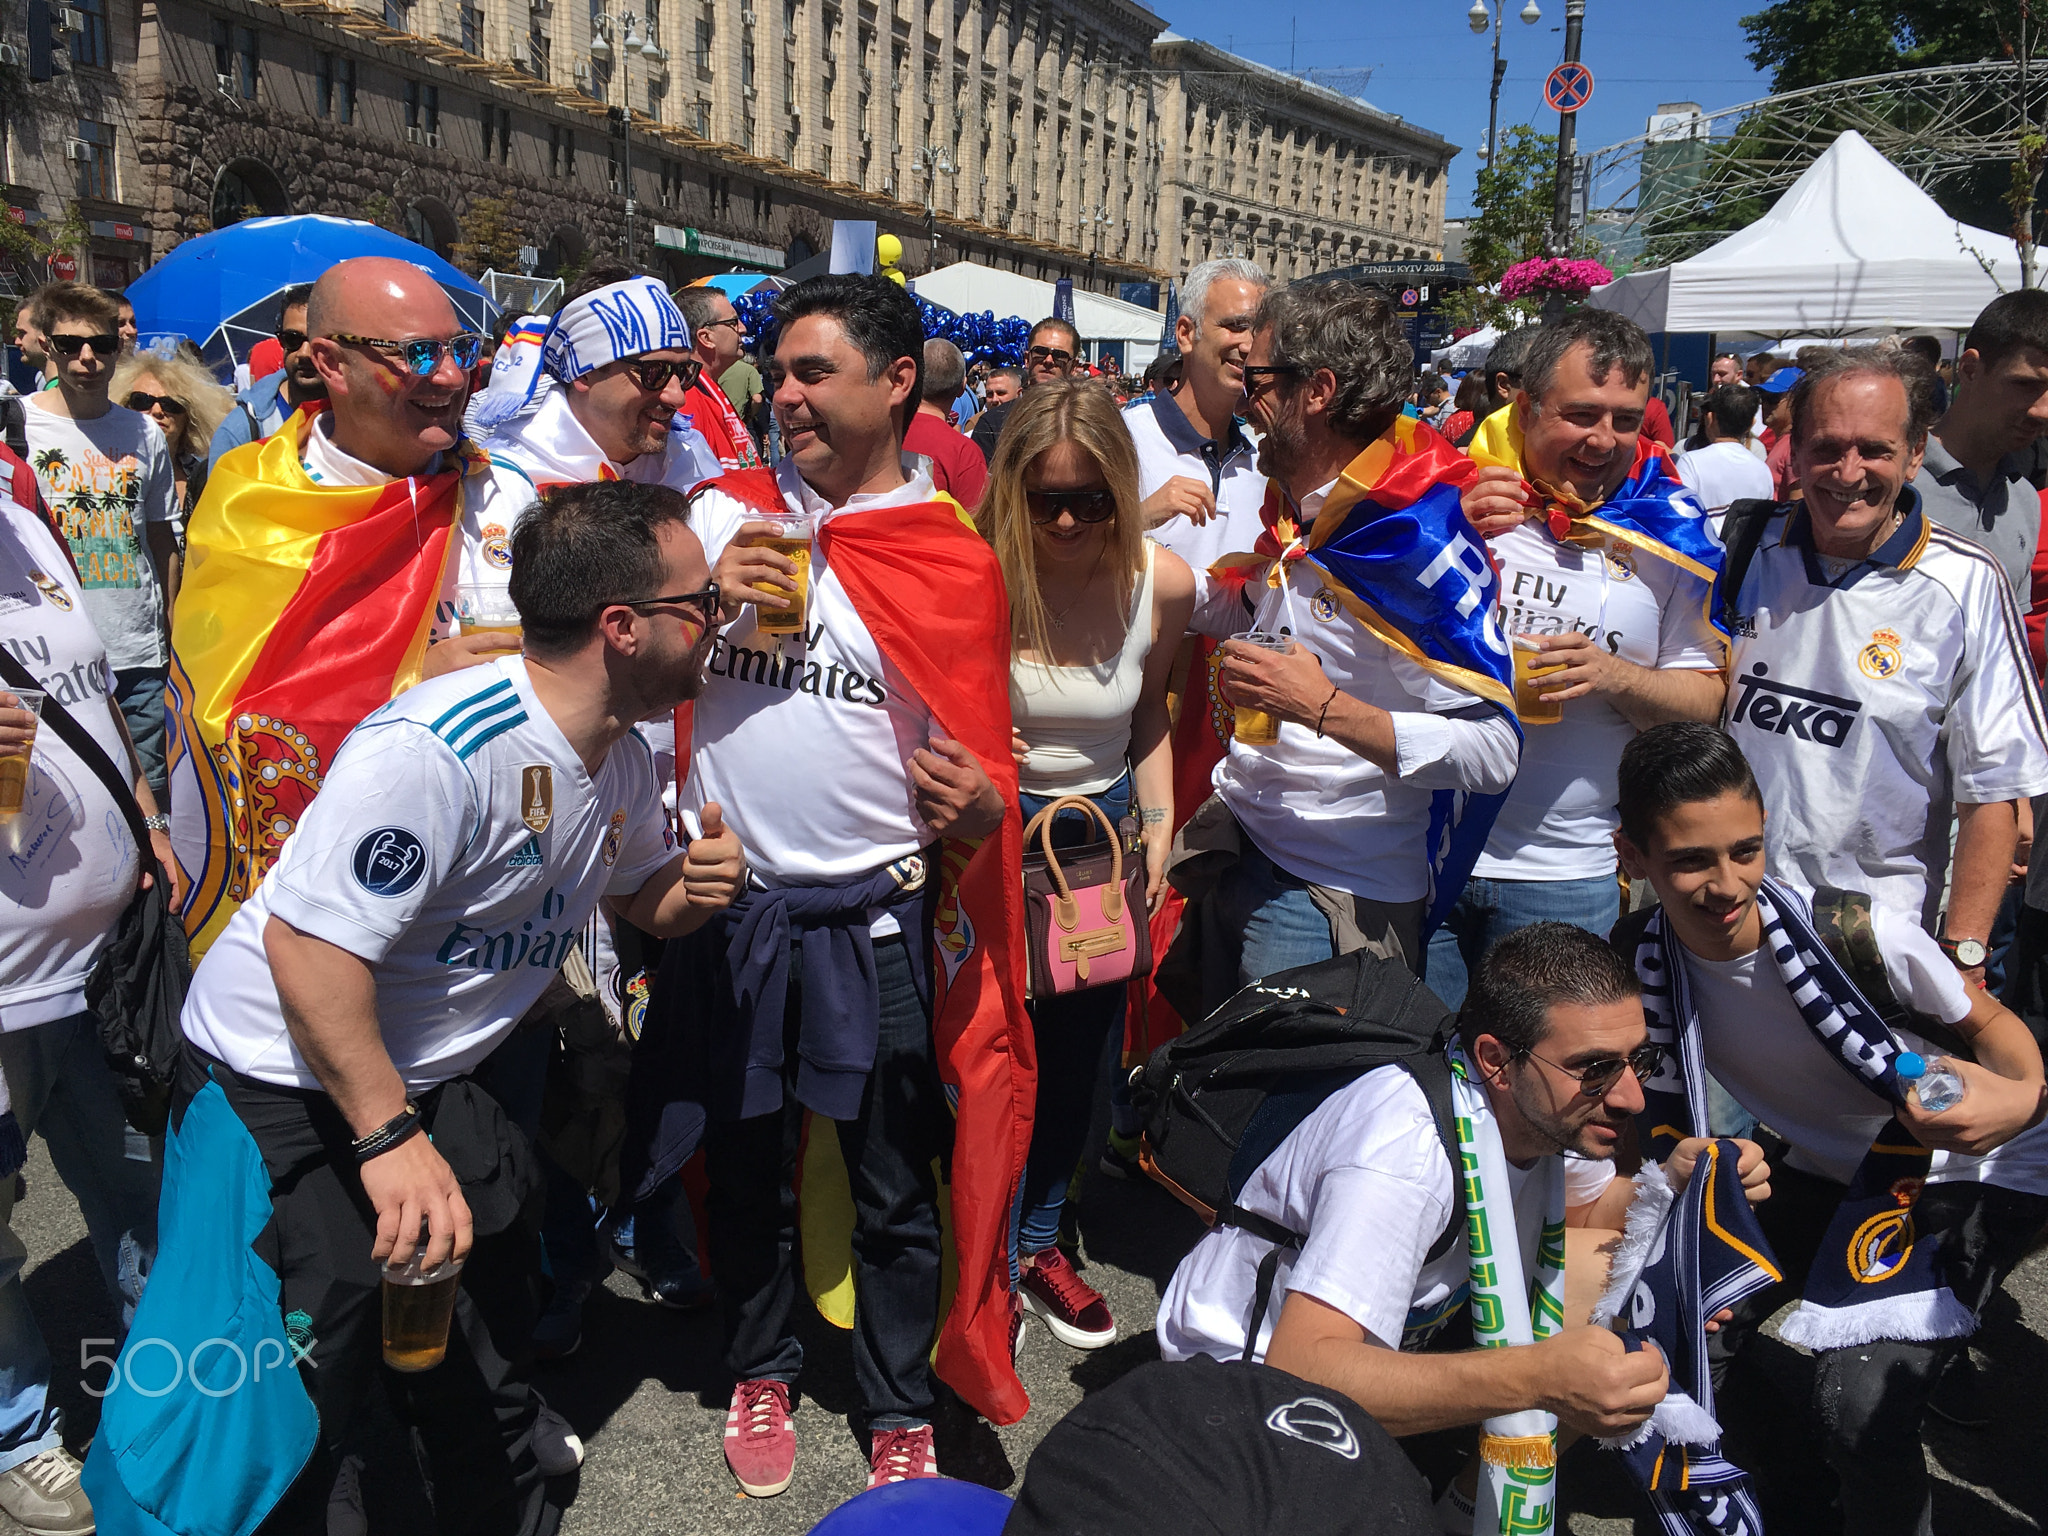 Spanish fans taking photo with people in fan zone